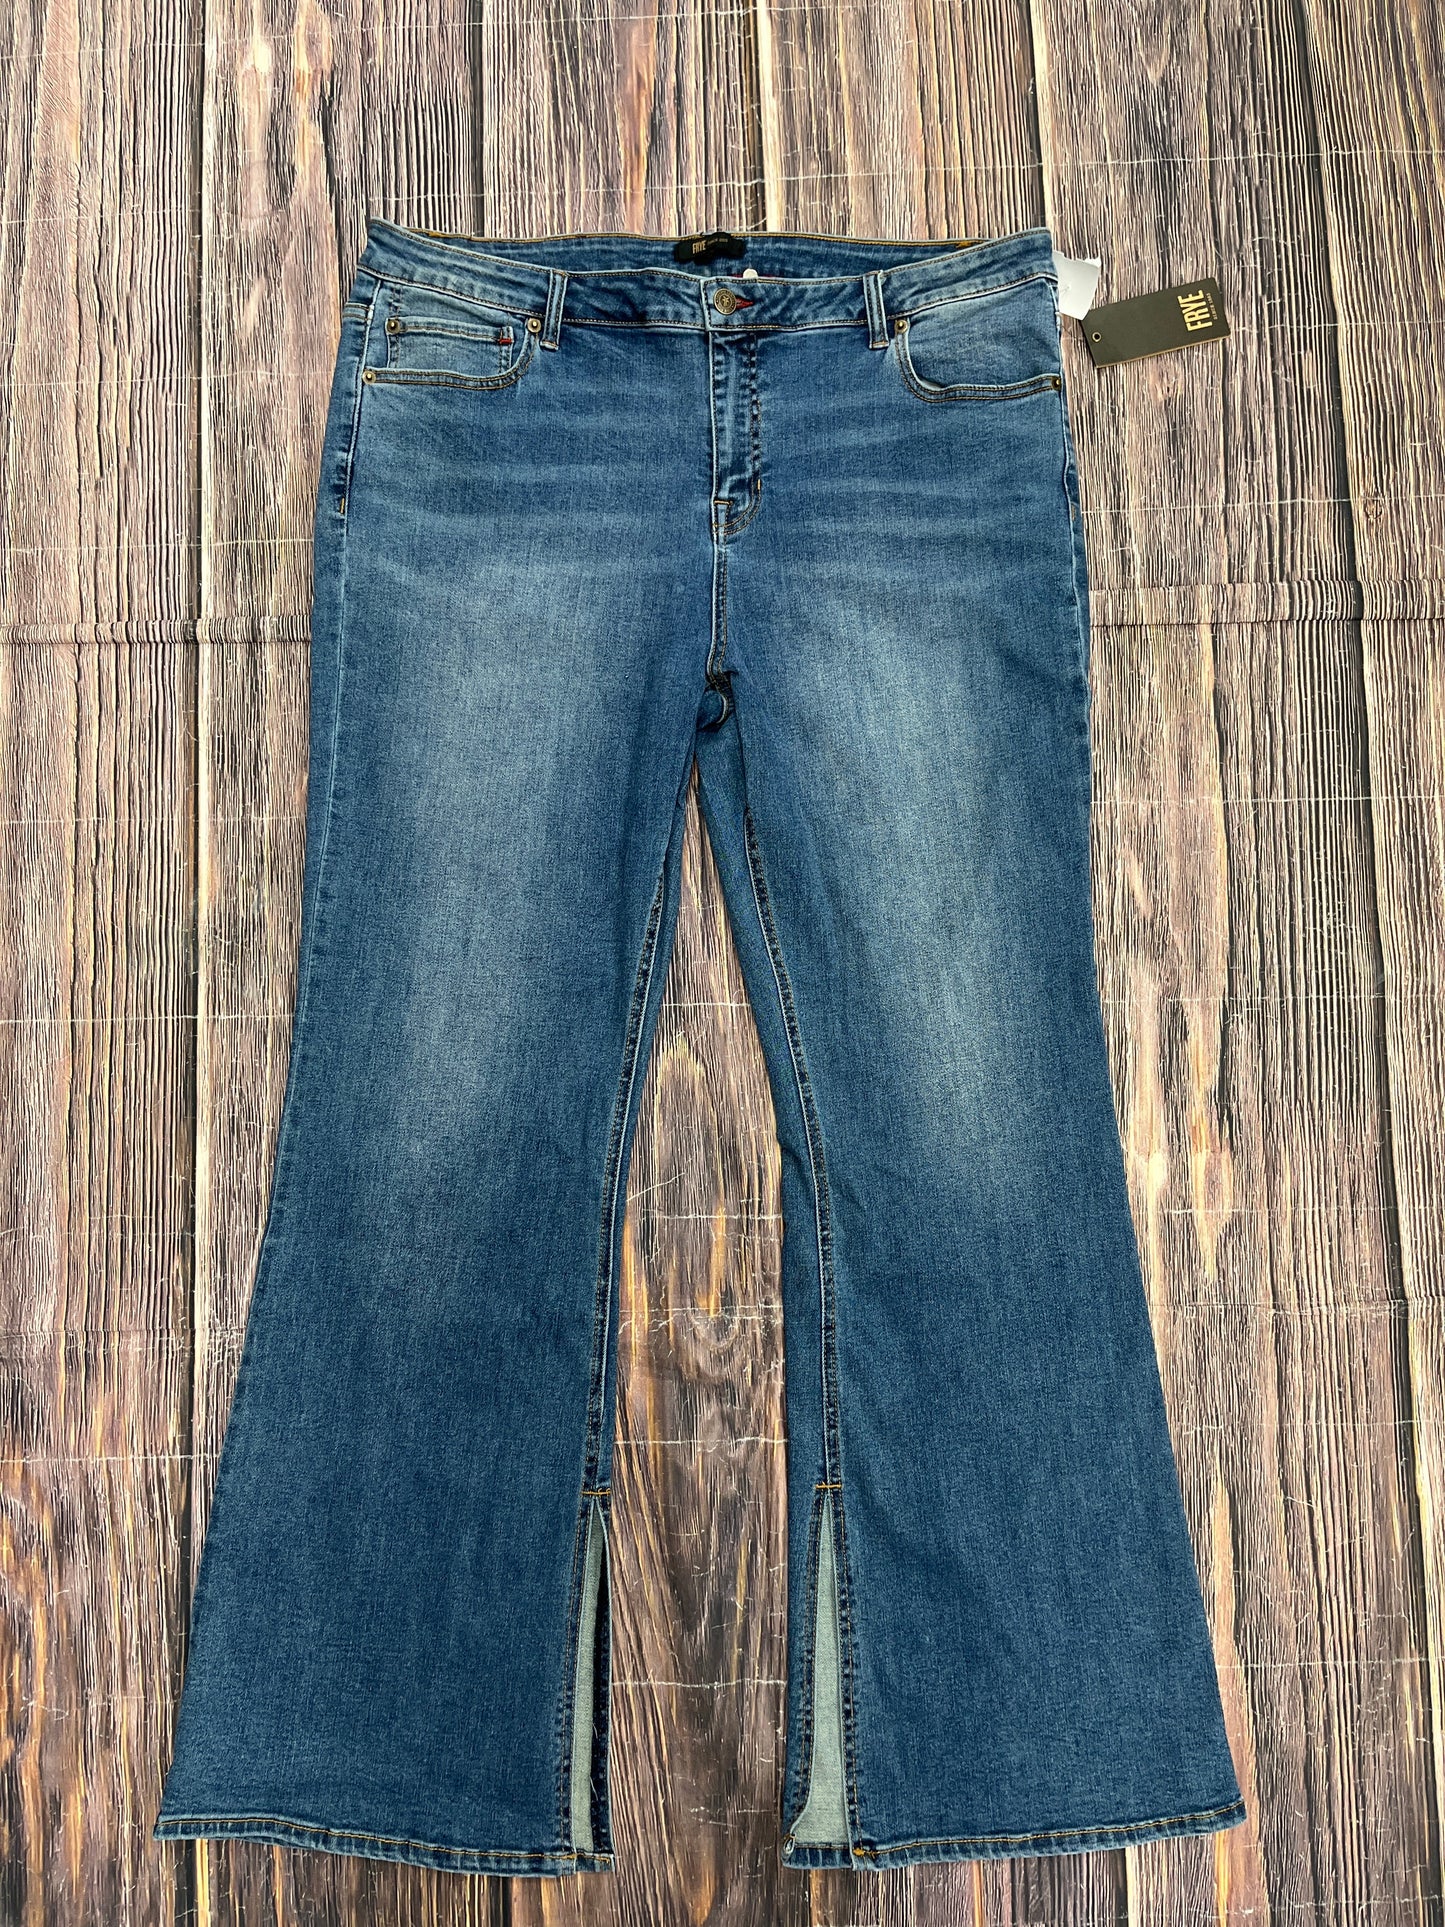 Blue Denim Jeans Boot Cut Frye, Size 20